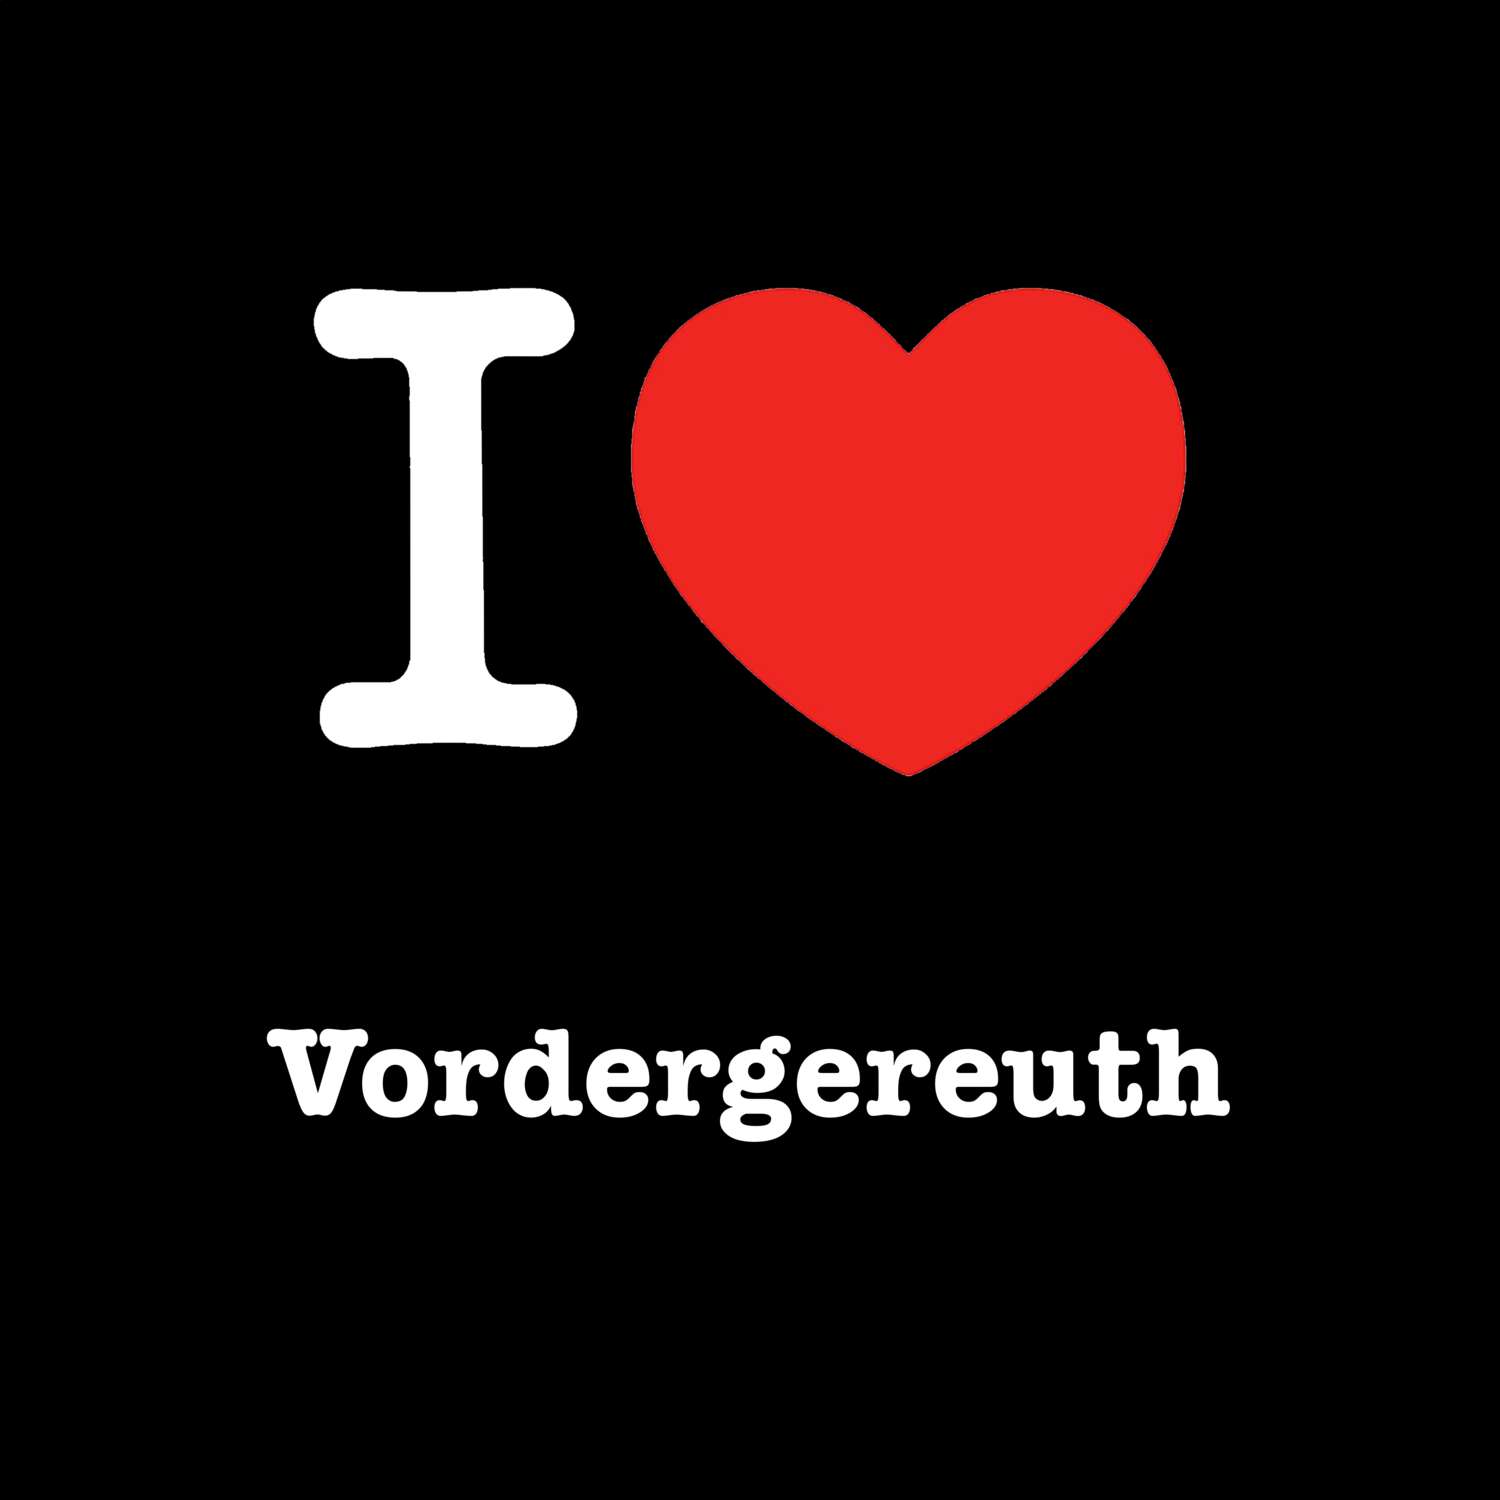 Vordergereuth T-Shirt »I love«